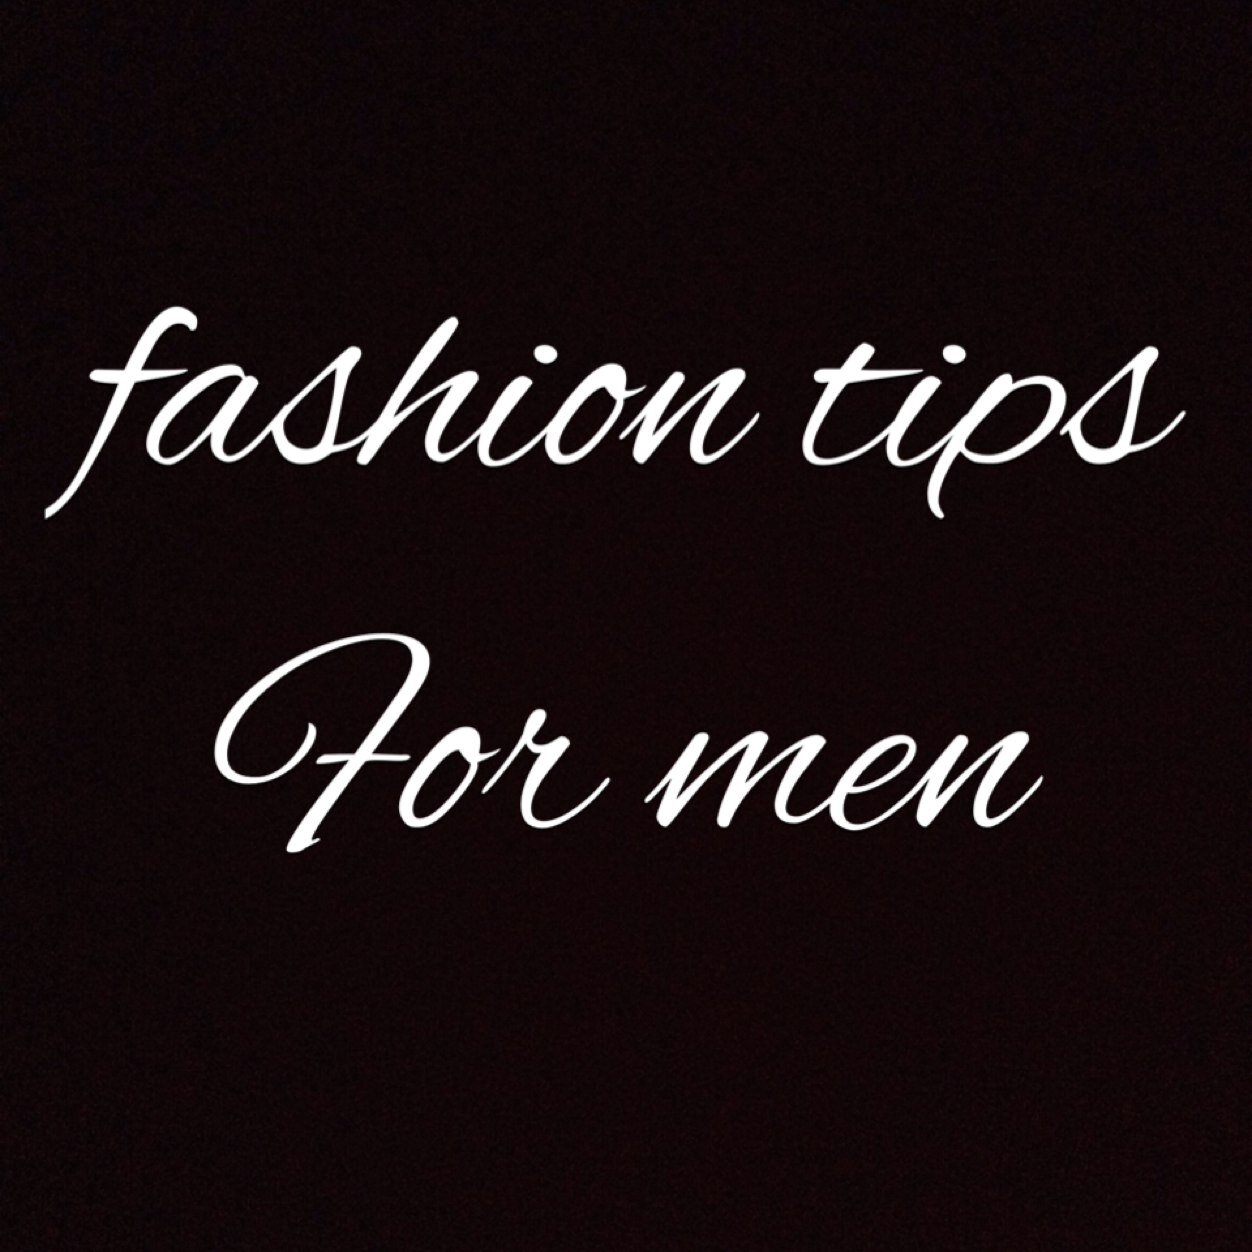 Instagram : @fashiontips4men
#fashion #style #men